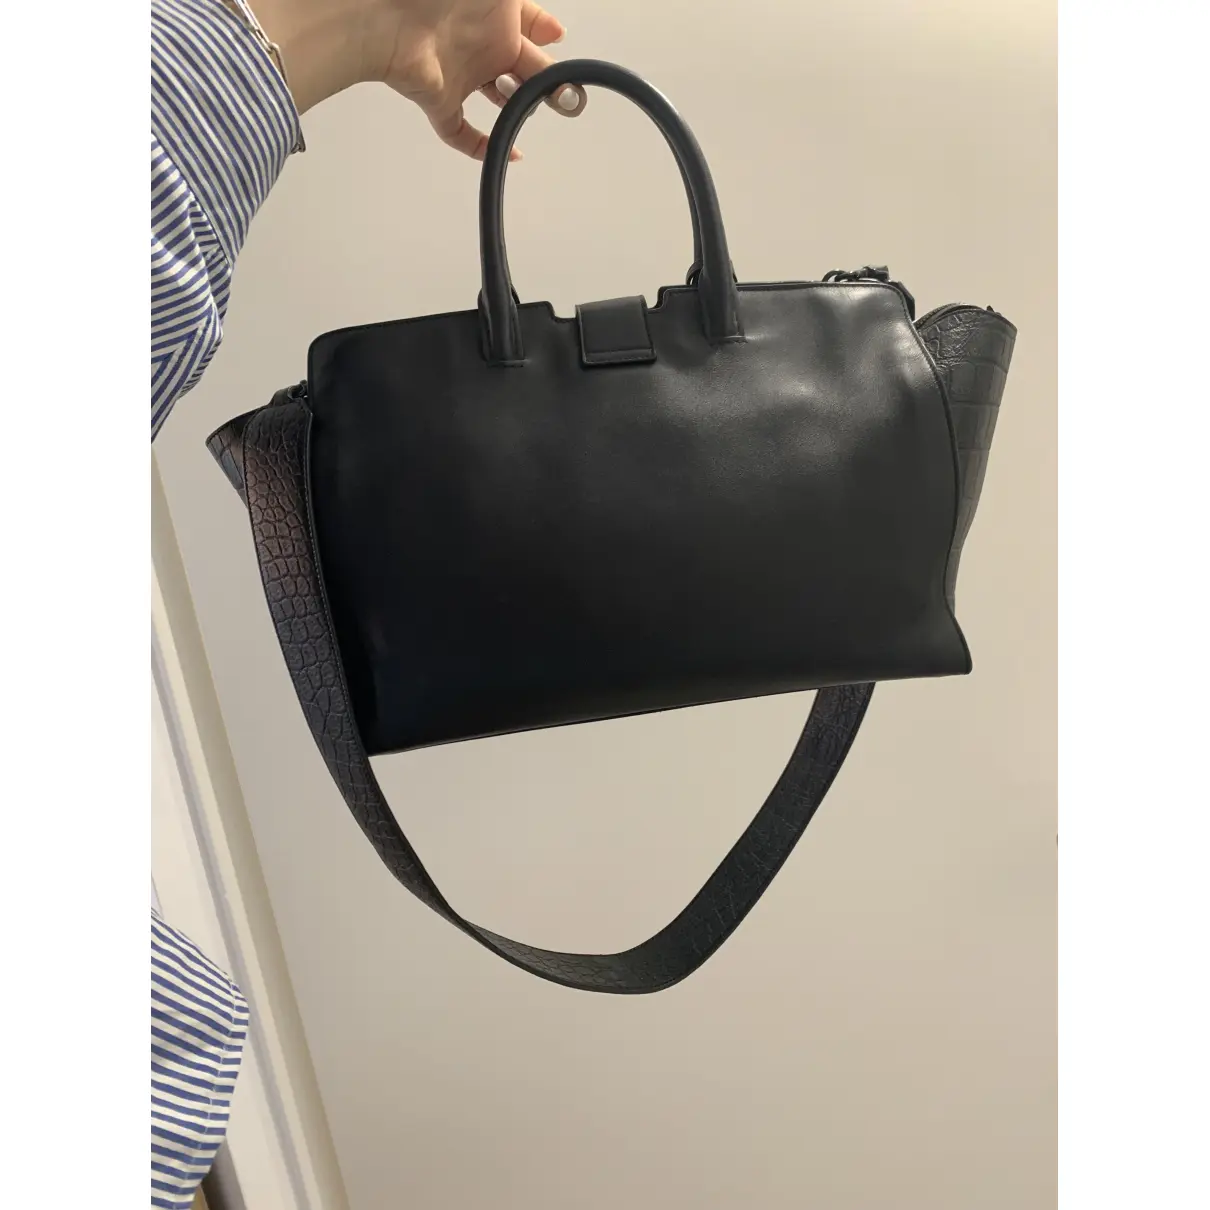 Buy Yves Saint Laurent Downtown leather handbag online